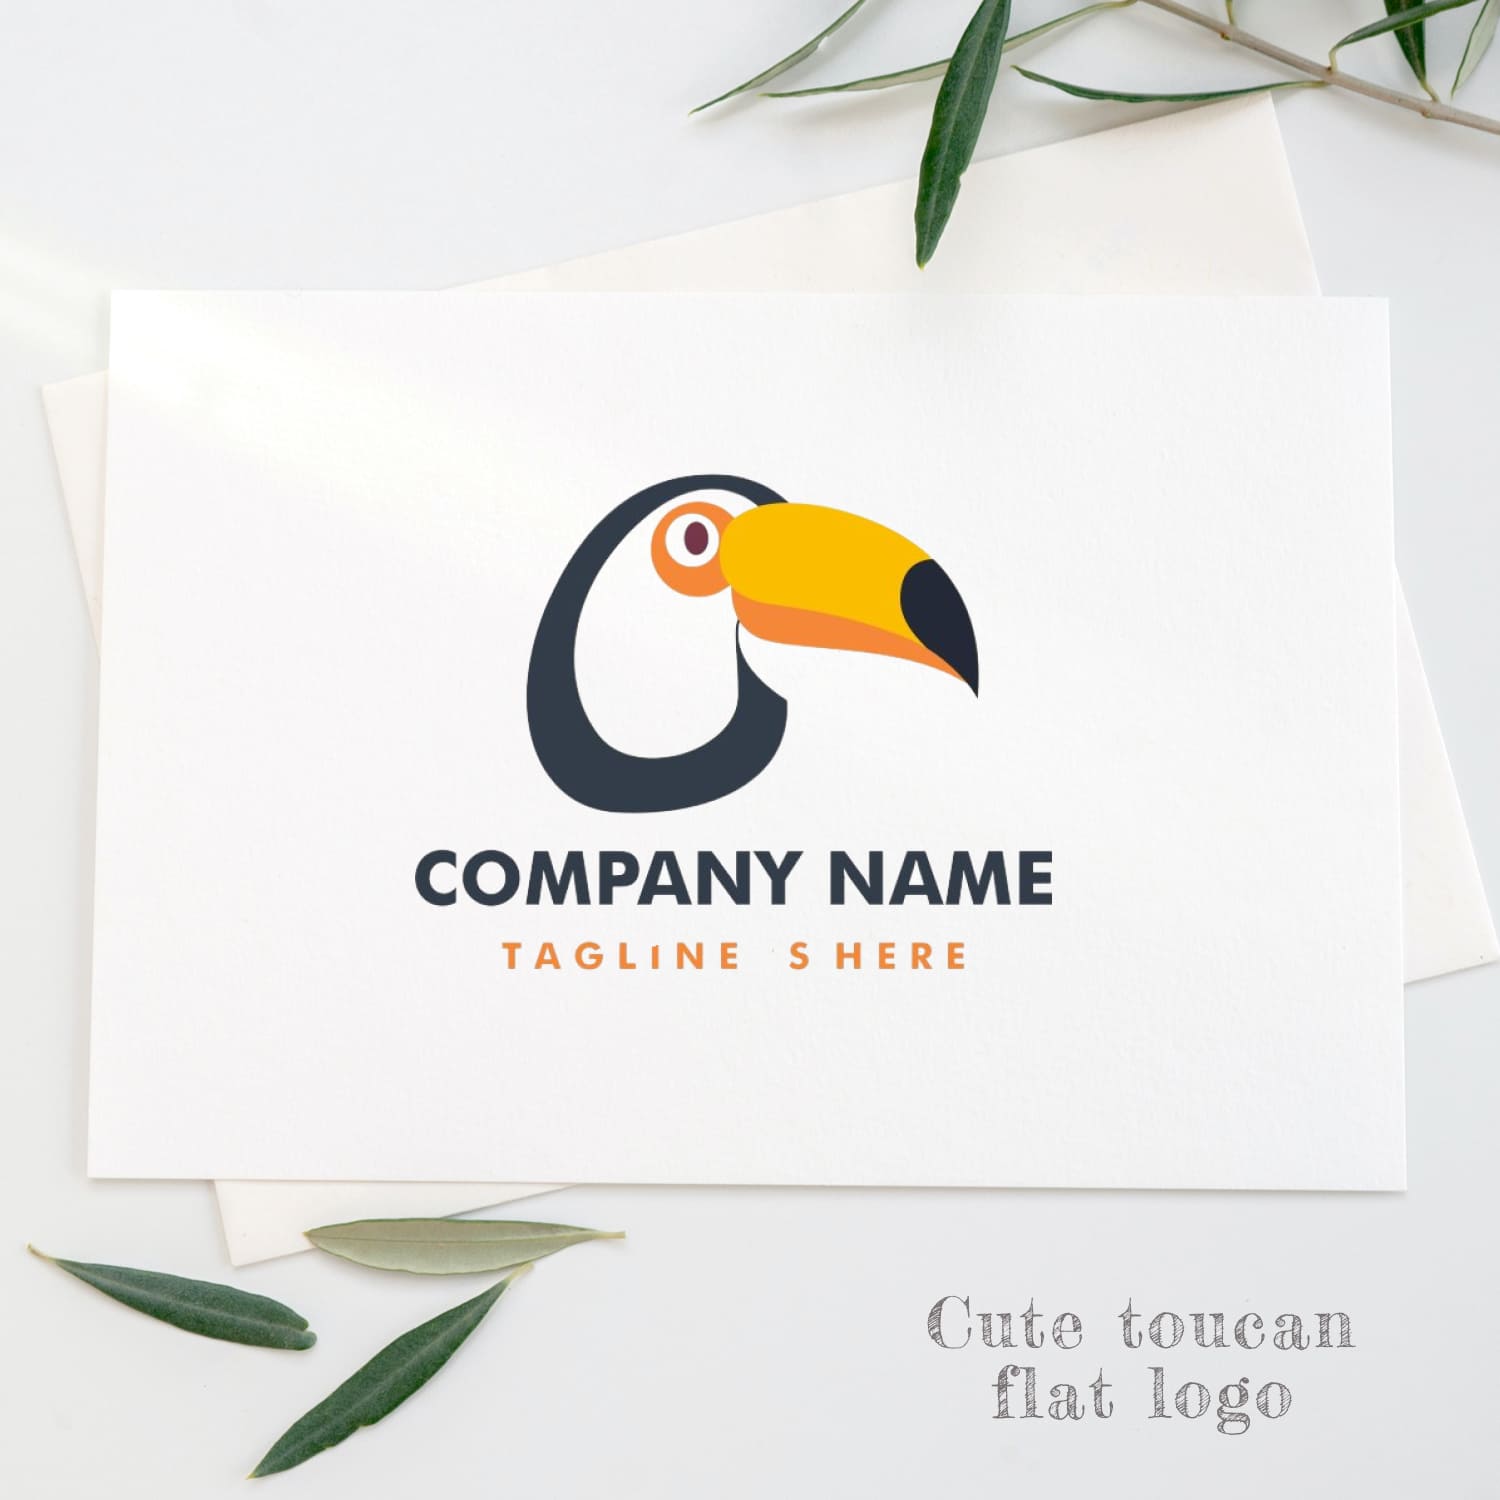 Cute Toucan Flat Logo cover image.